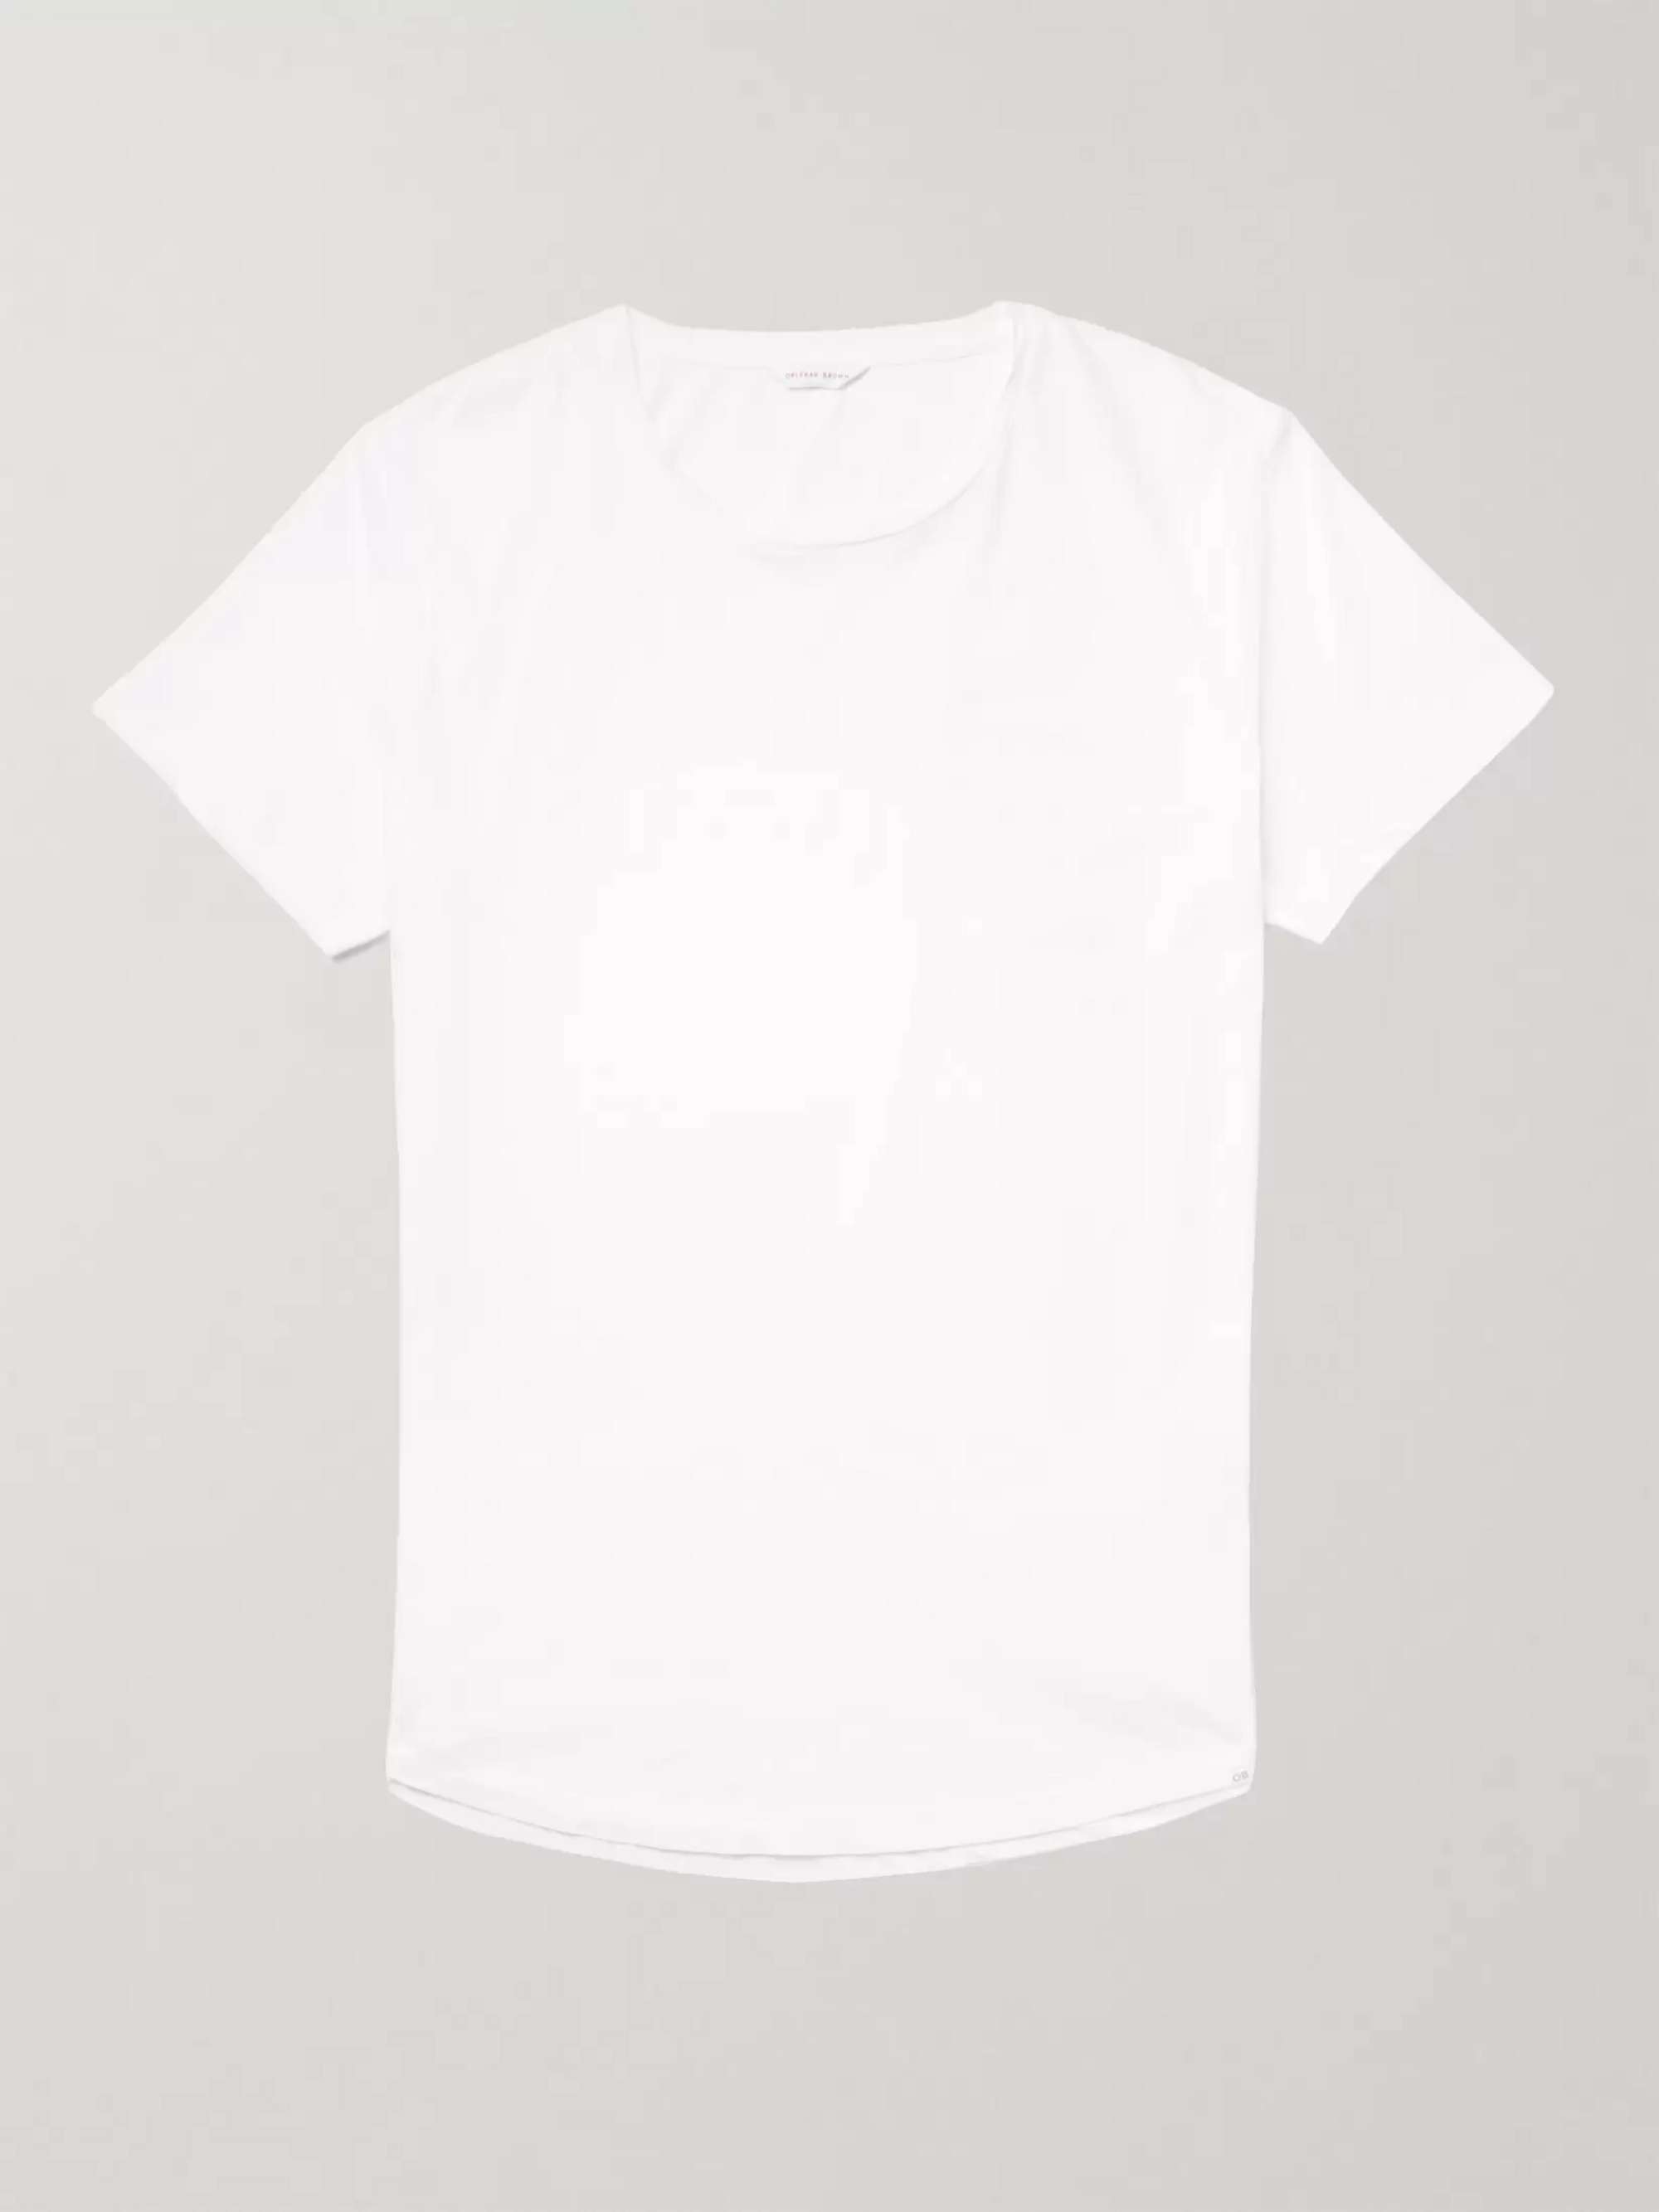 OB-T Slim-Fit Cotton-Jersey T-Shirt